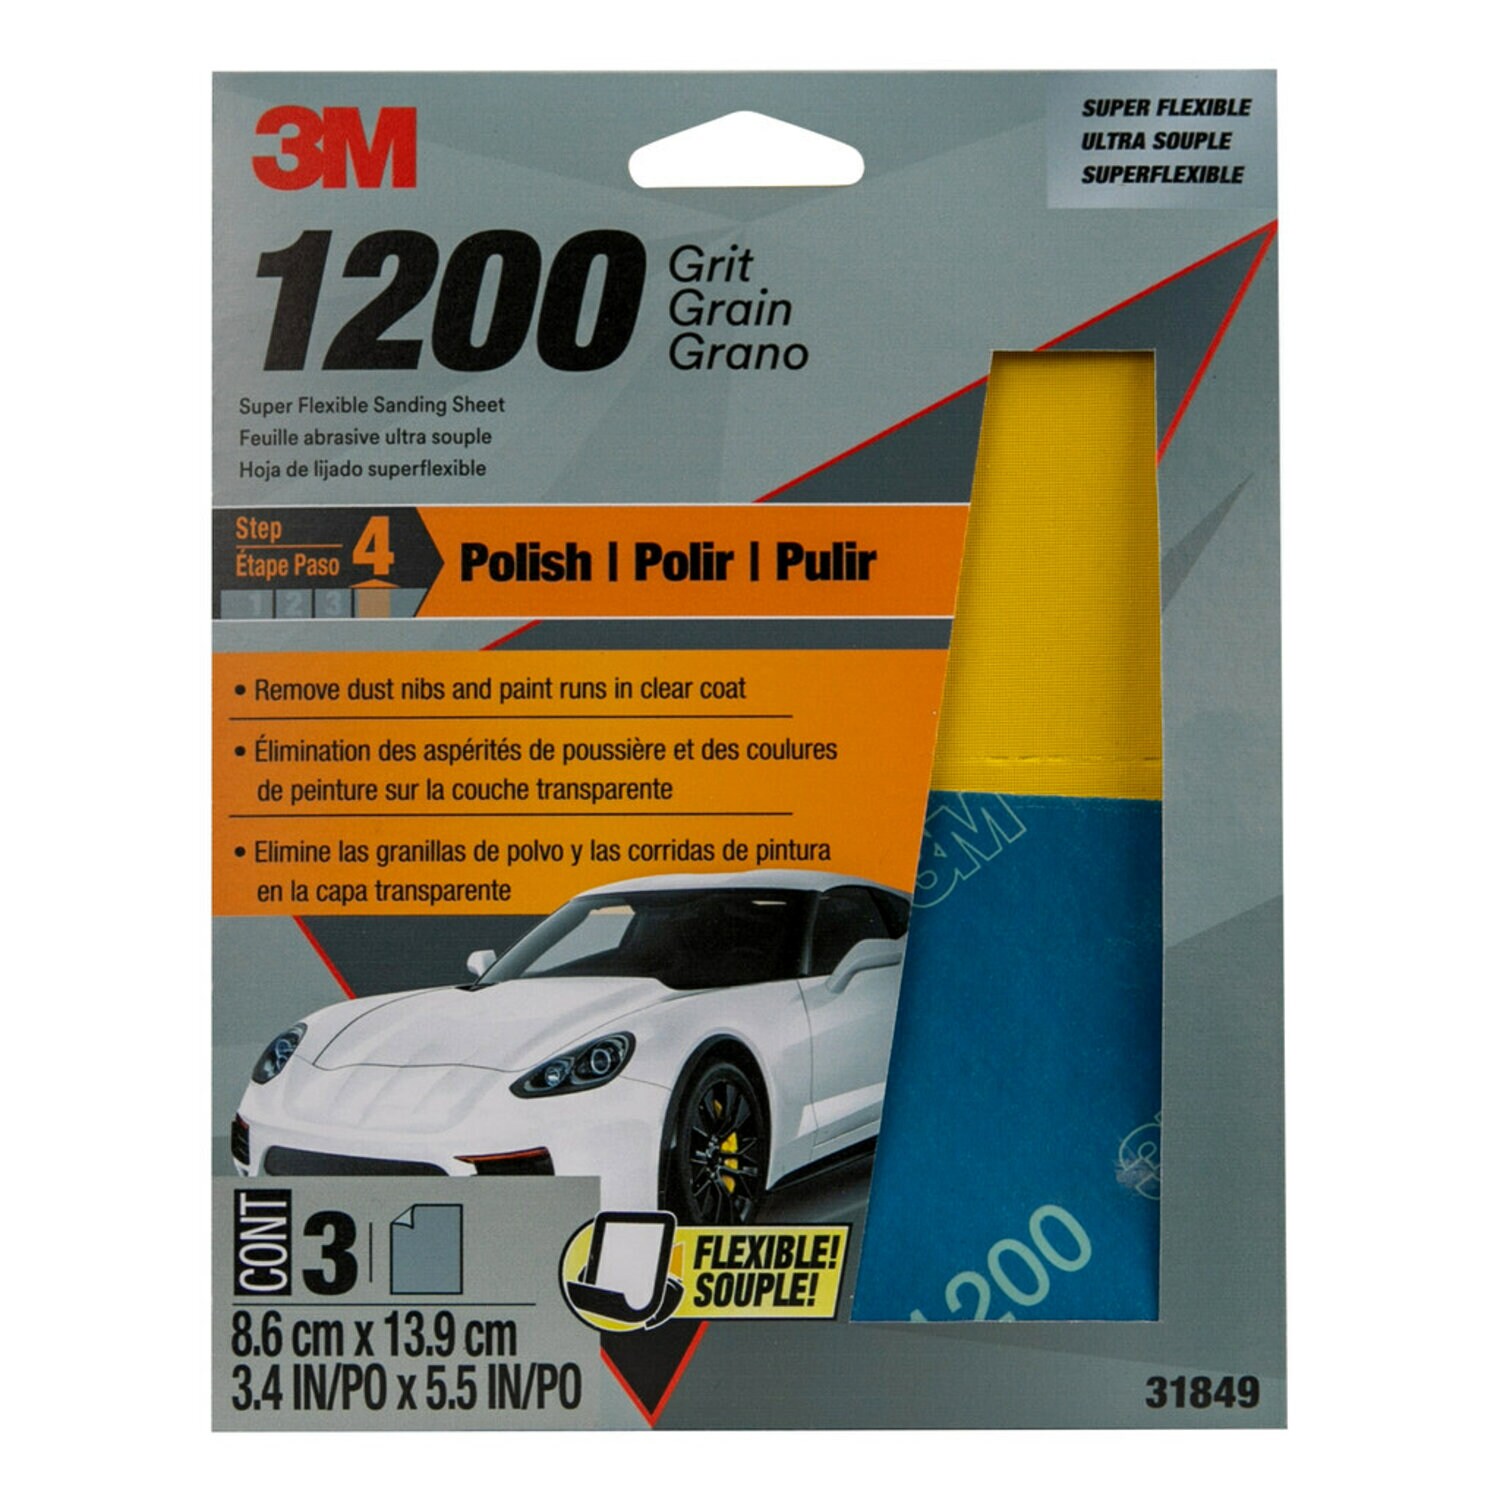 7100152960 - 3M Super Flexible Sanding Sheets, 31849, 1200 Grit, 3 pack, 20 packs
per case